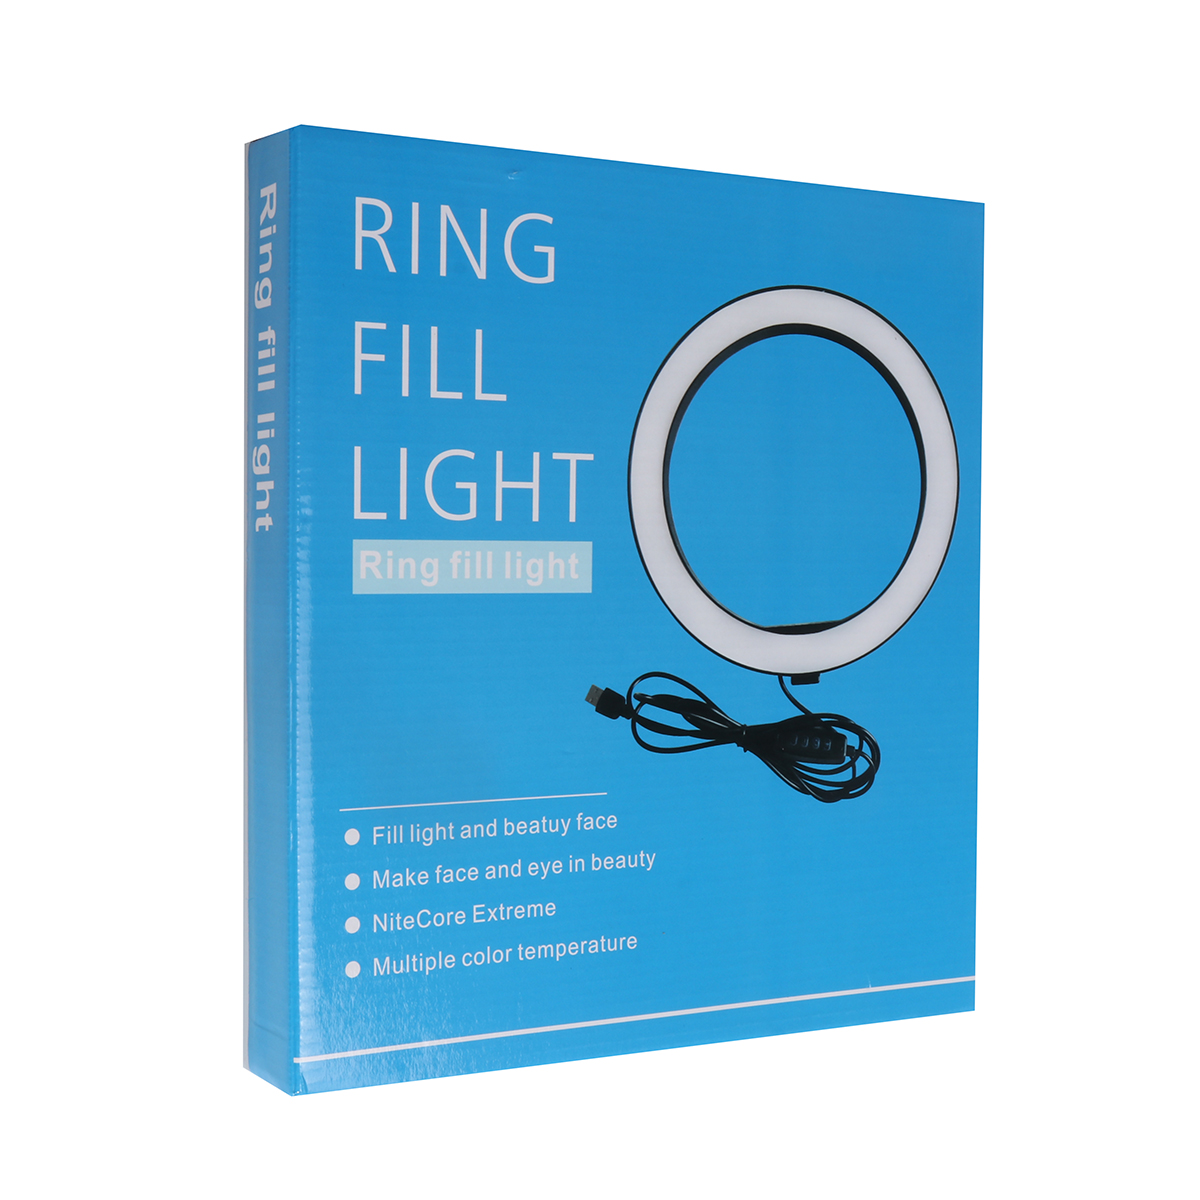 Ring-Fill-Light-Lamp-12W-Live-Light-USB-Power-Flat-Ring-Light-LED-Lamp-with-Phone-Holder-1700822-7